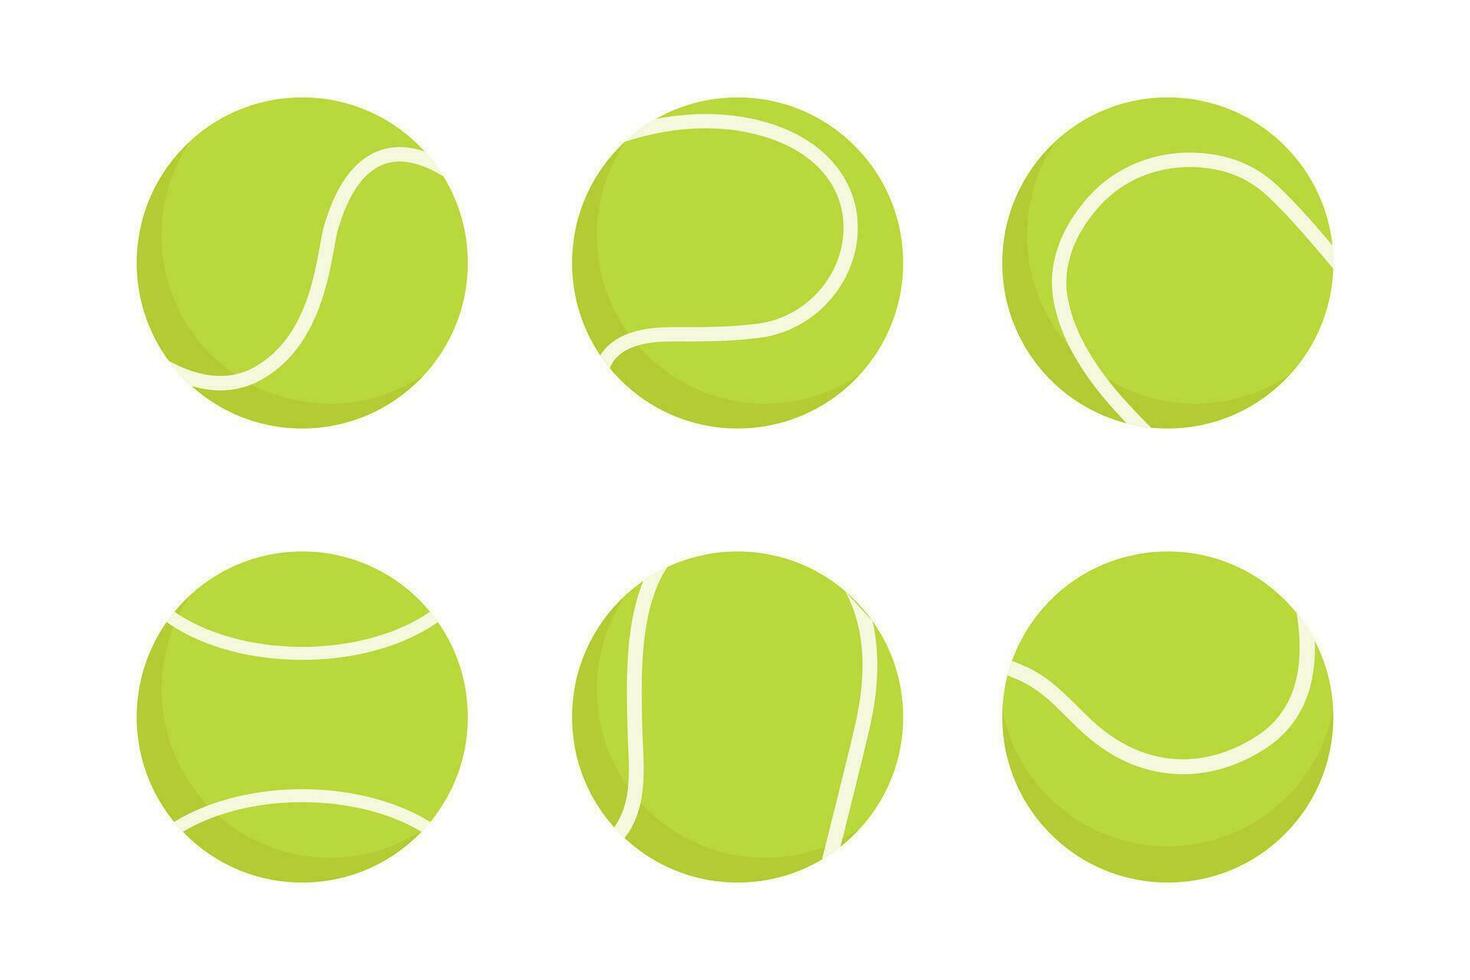 Tennis Vektor, Sport, Tennis, Vektor, Tennis Ball, Schläger, Silhouette, Sport Silhouette, Tennis Logo, Spiel Vektor, Spiel Turnier, Tennis Turnier, Meister Liga, Tennis Verein, Ball vektor